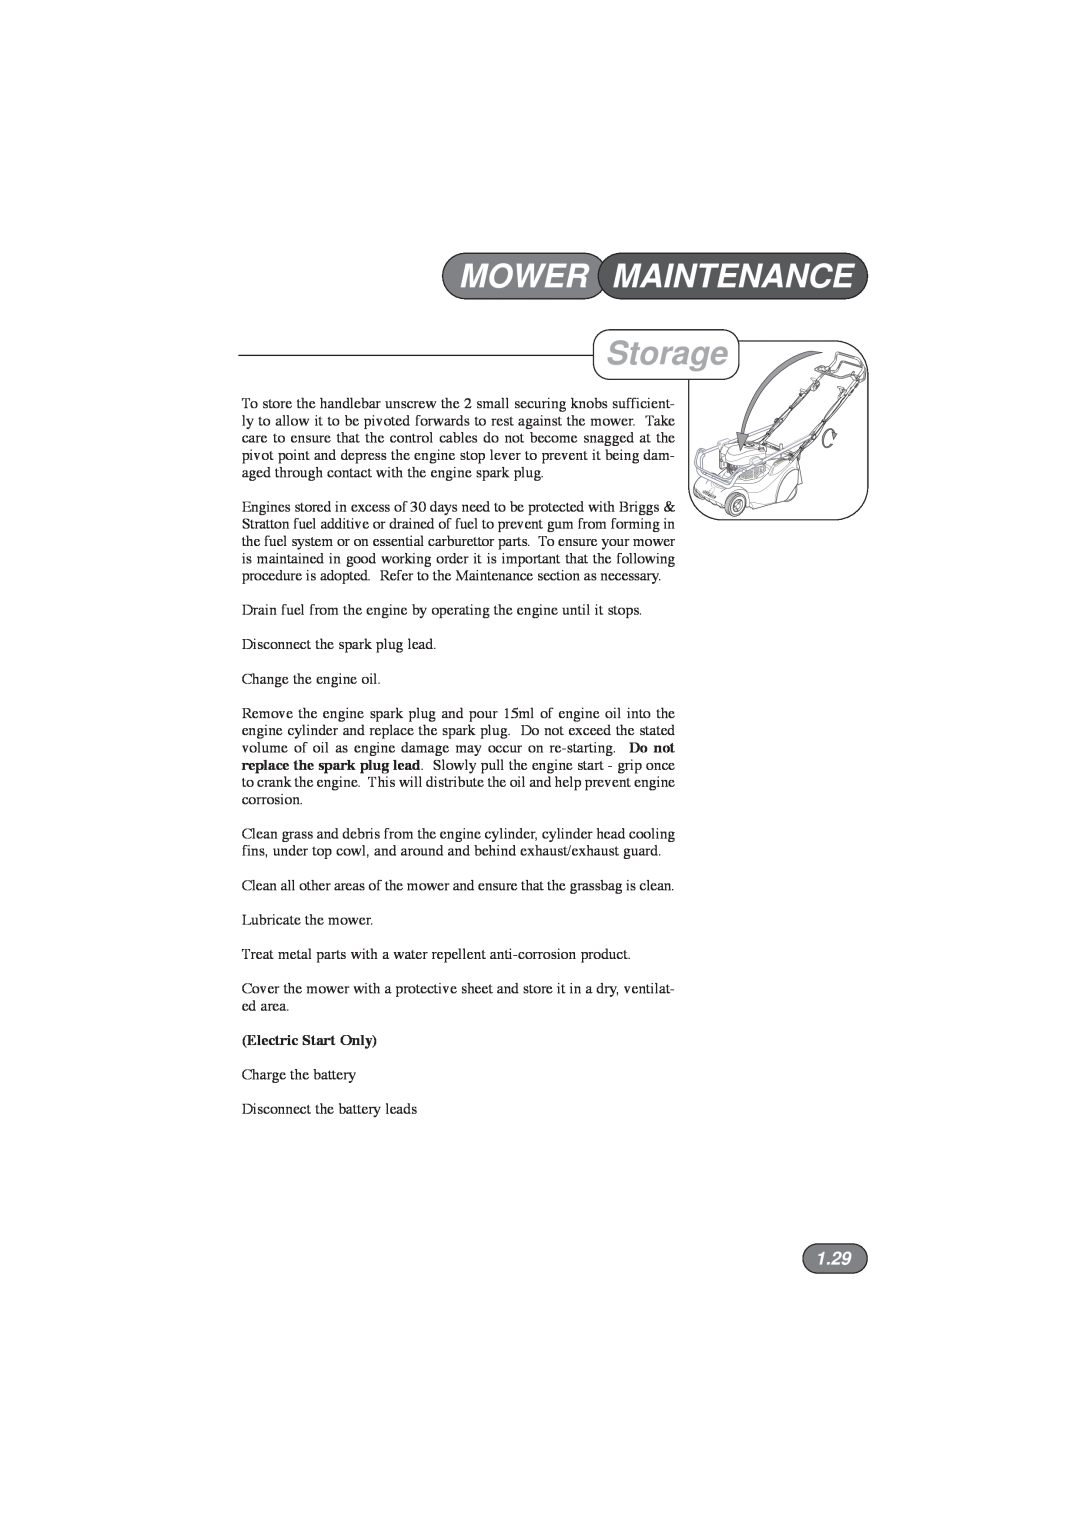 Hayter Mowers 410E, 412E, 413E manual Storage, 1.29, Electric Start Only, Mower Maintenance 